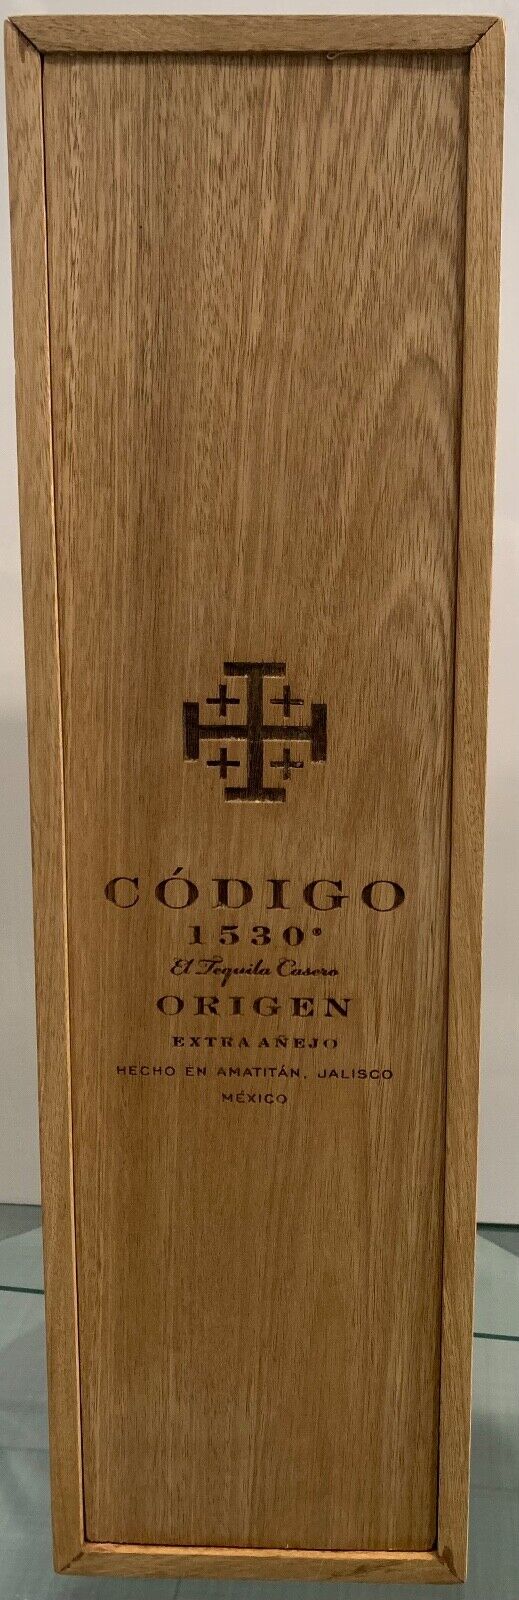 Tequila Codigo 1530 Origen Extra Anejo Wooden Display Box